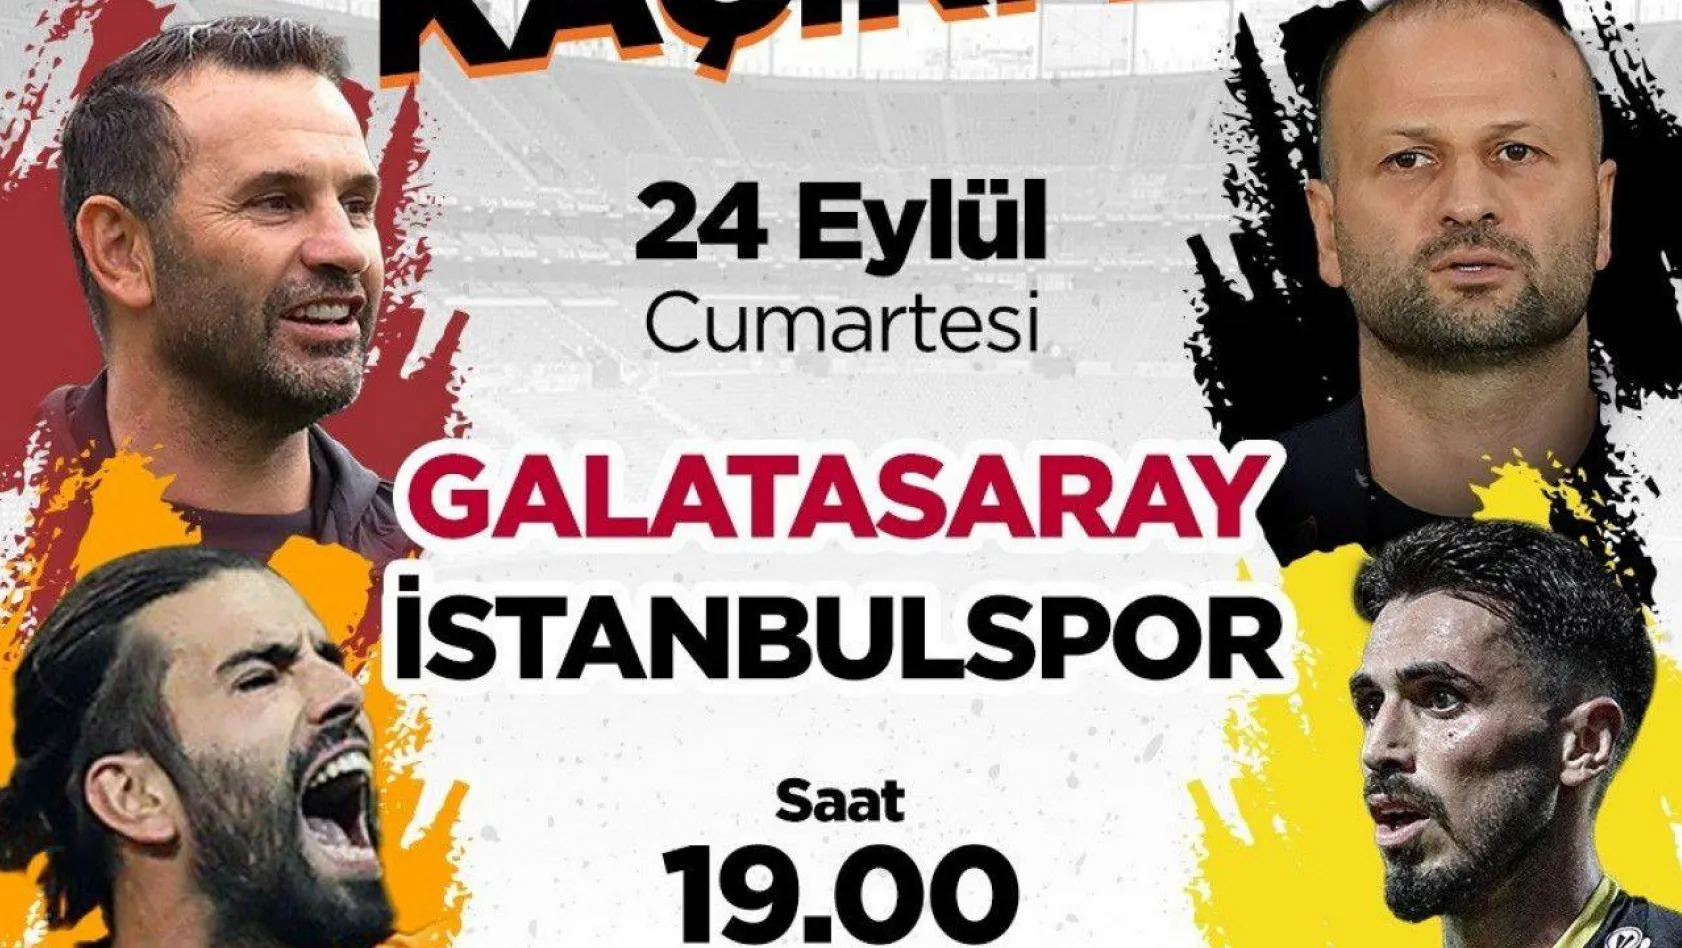 Galatasaray - İstanbulspor hazırlık maçı D-Smart'ta